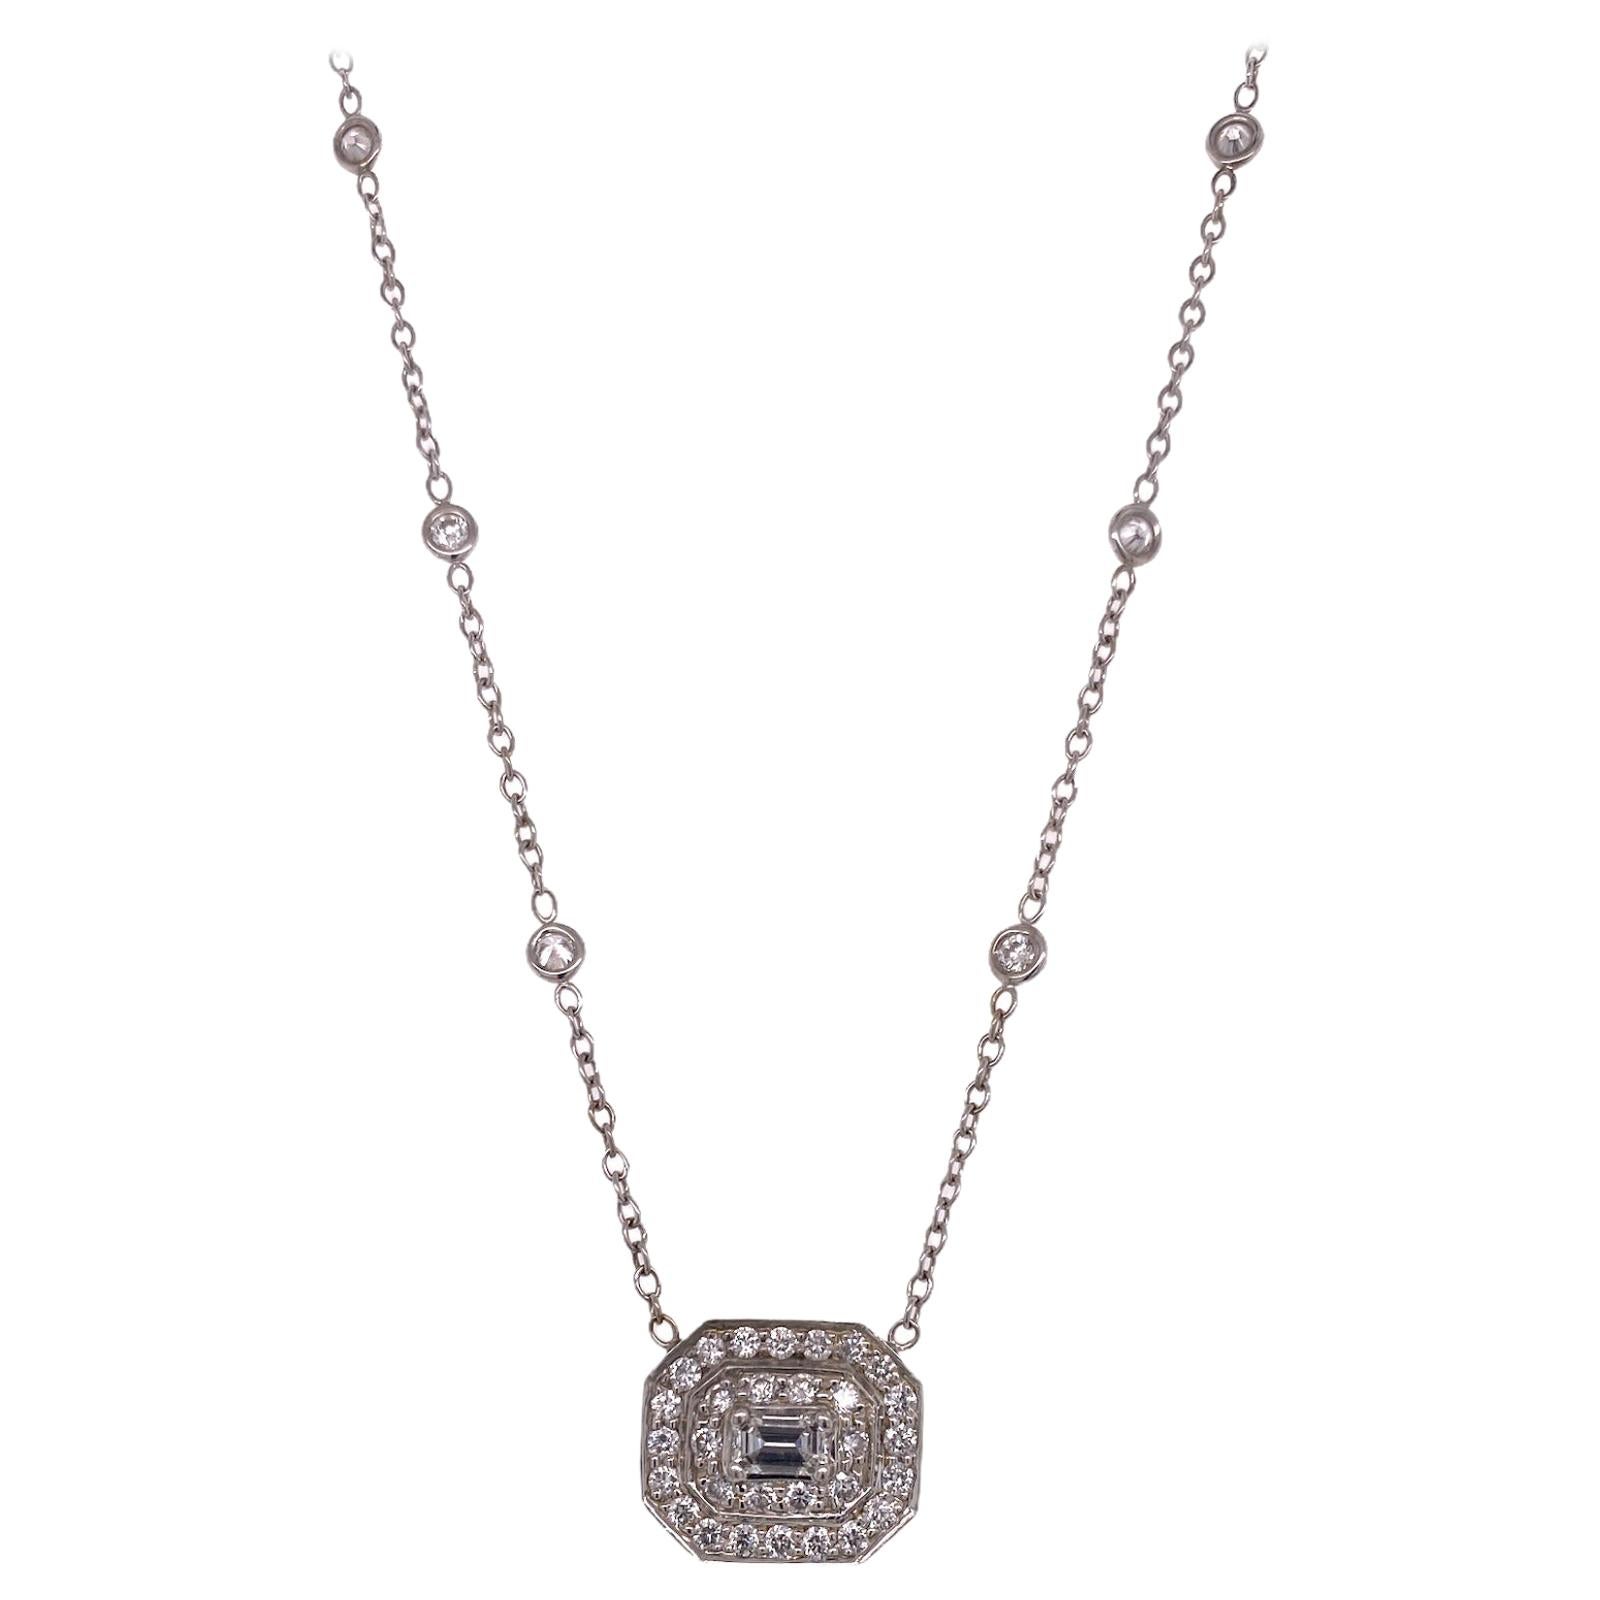 Penny Privelle Emerald Cut Diamond Pendant Necklace Diamond by The Yard Chain